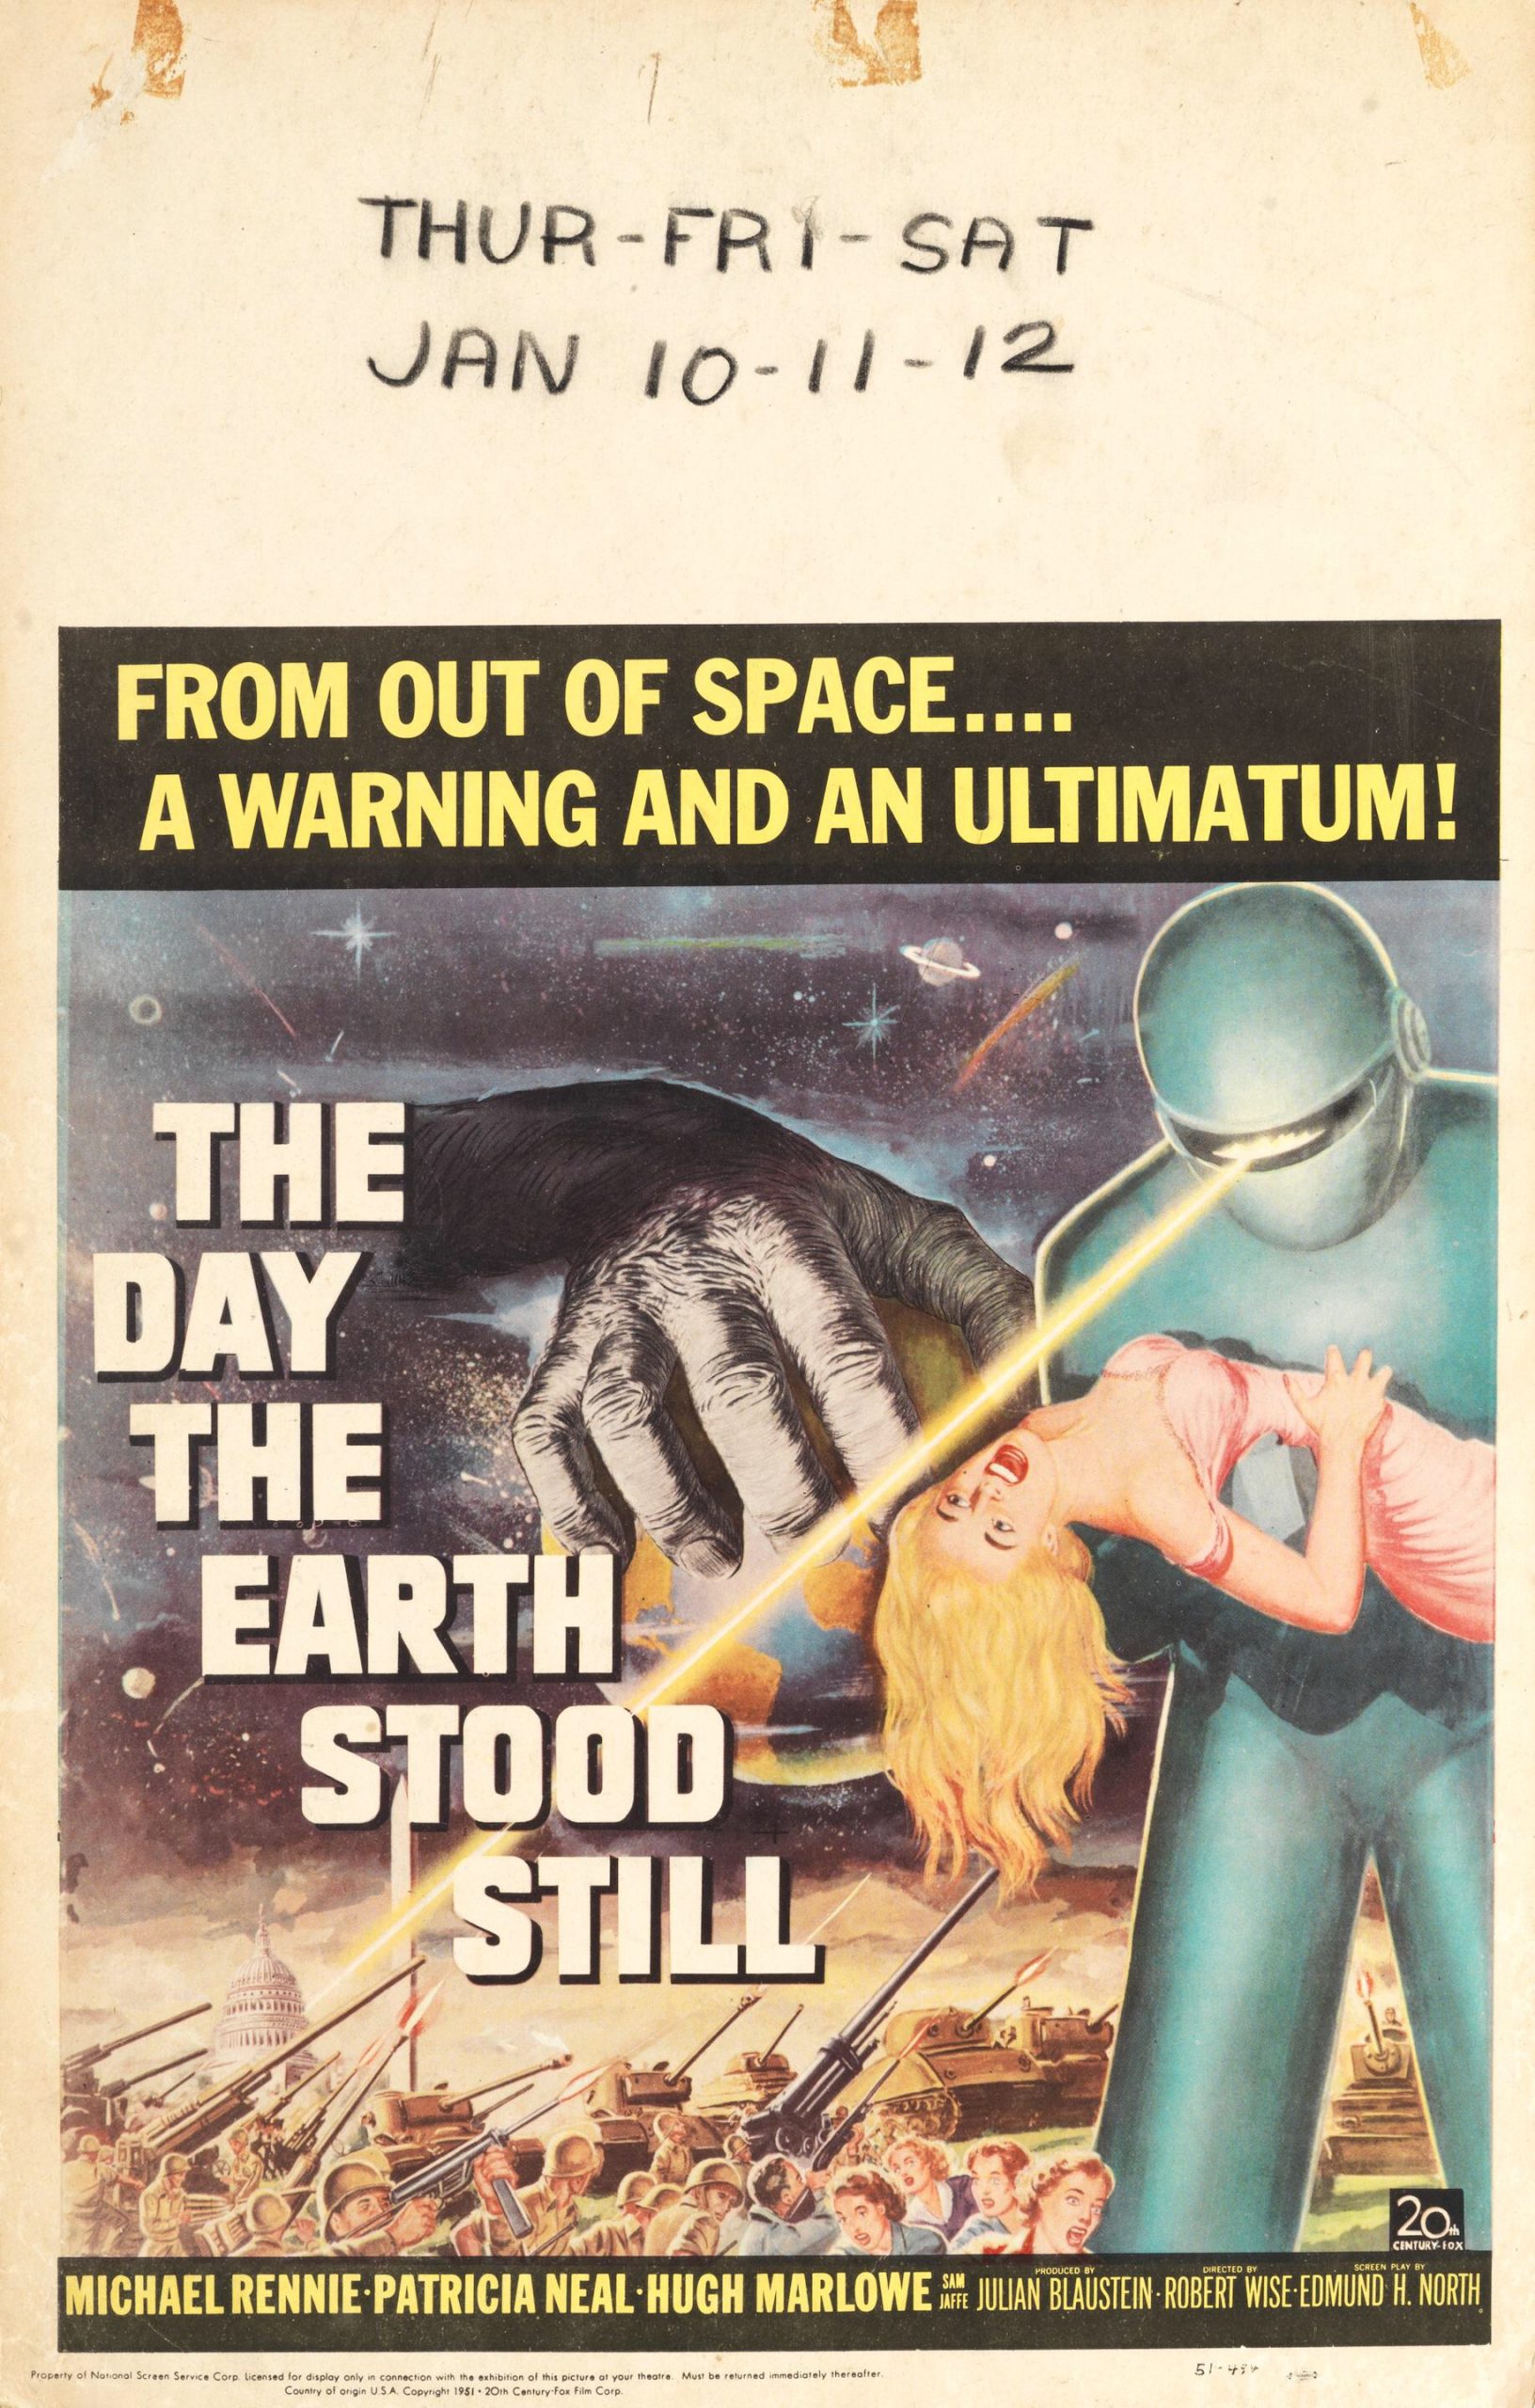 The Day The Earth Stood Still 20th Century Fox, 1951, US window card via Bonhams